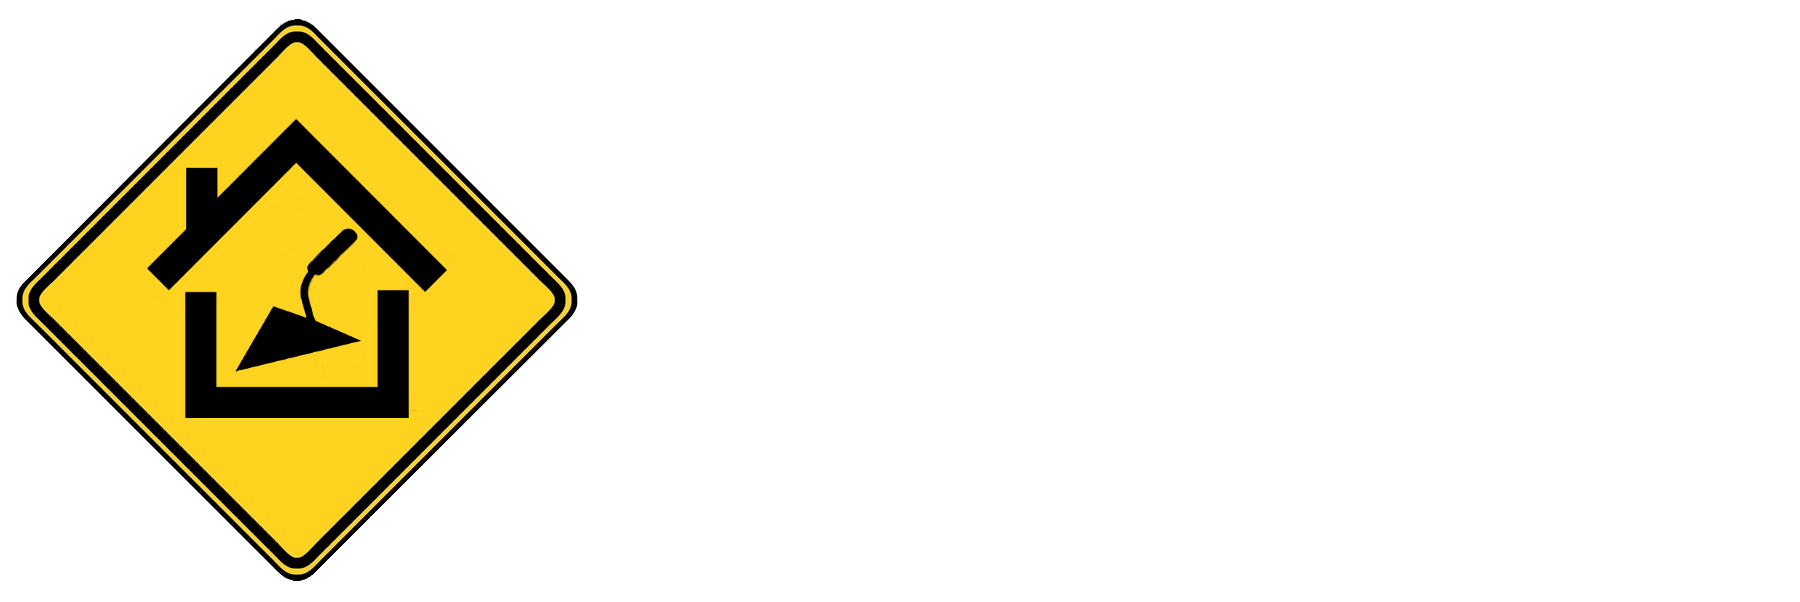 Euro-Remont s.c.